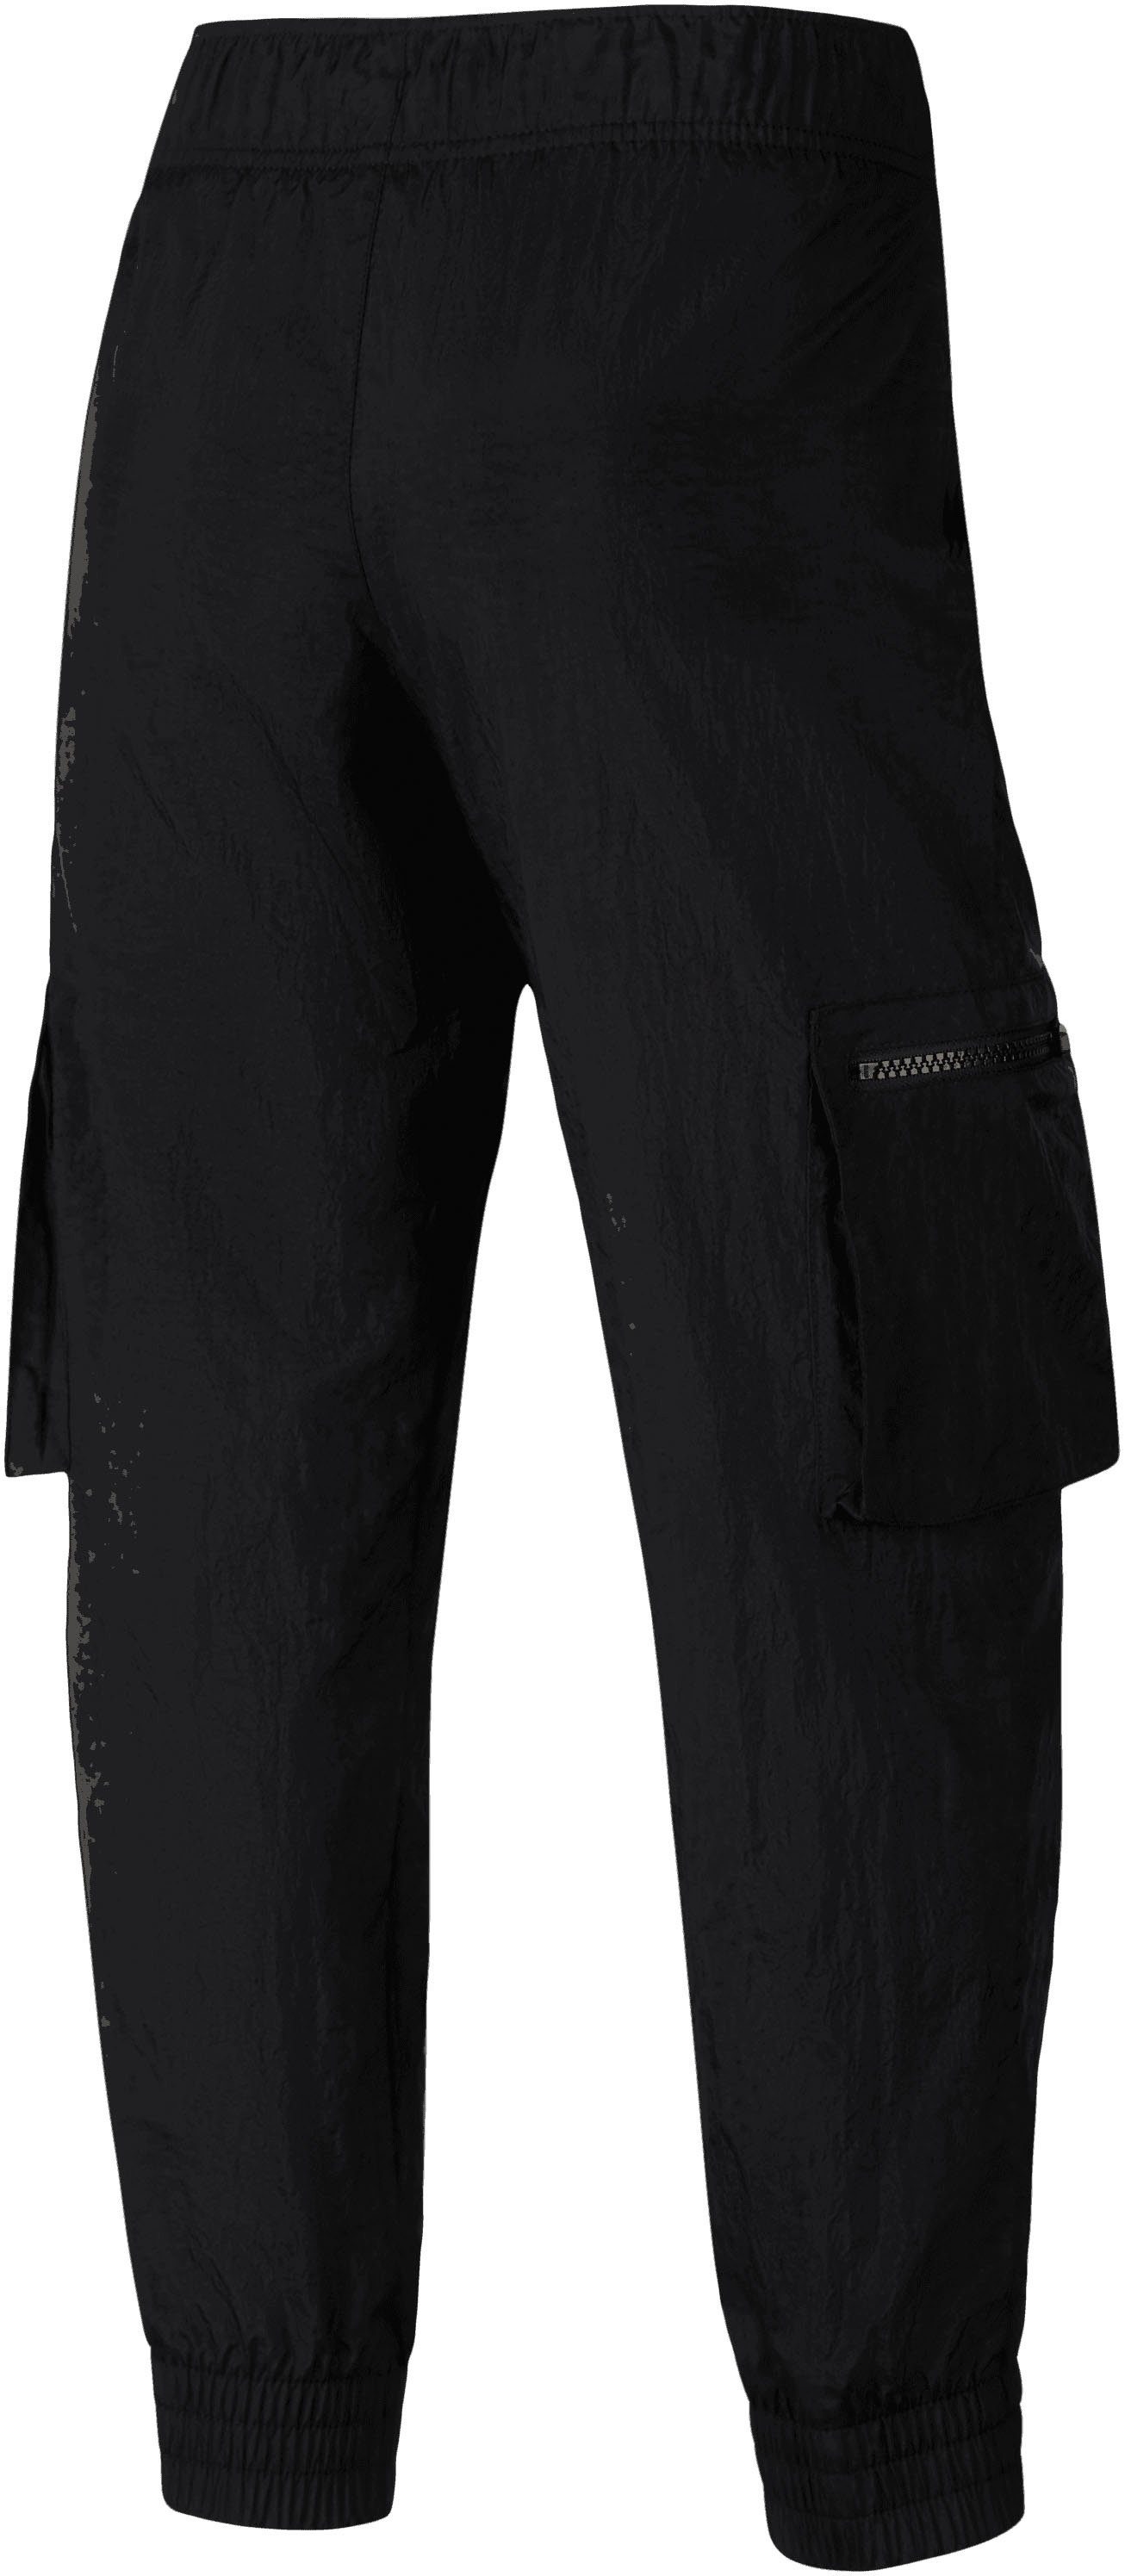 Cargo Kids' Pants BLACK/WHITE Nike Woven Sporthose Big (Girls) Sportswear